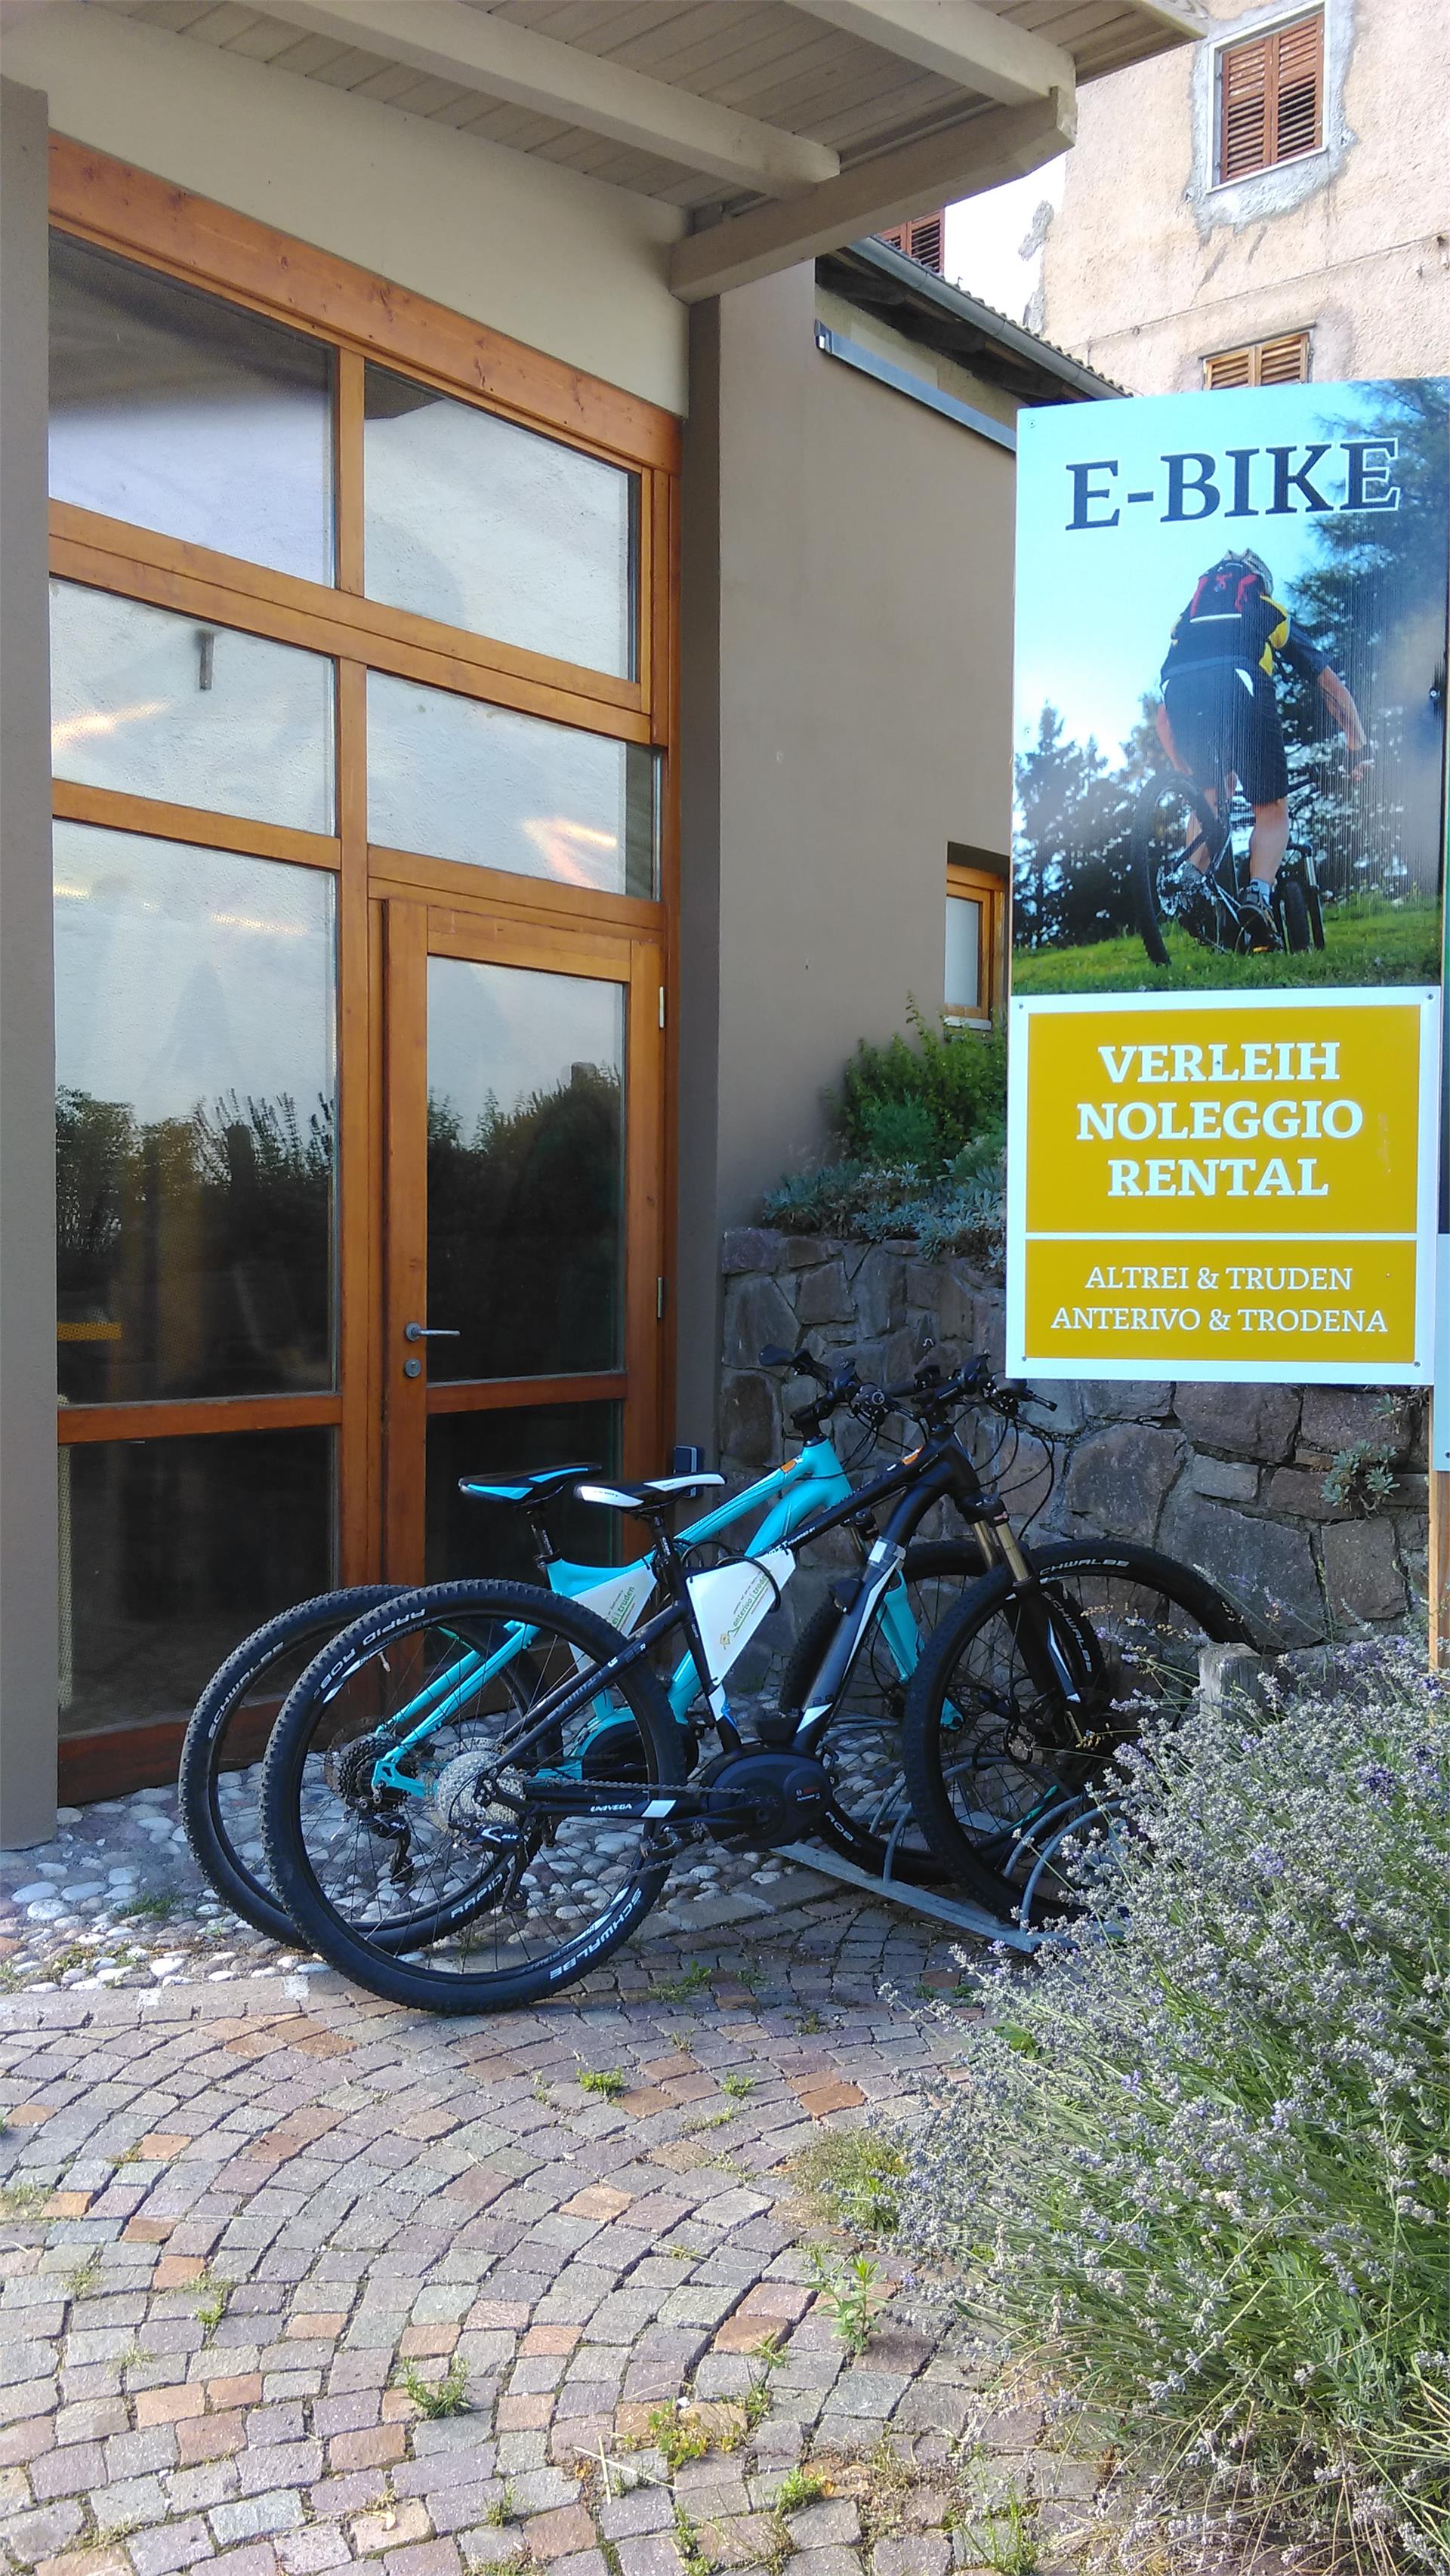 E-Bike rental at Trodena and Anterivo